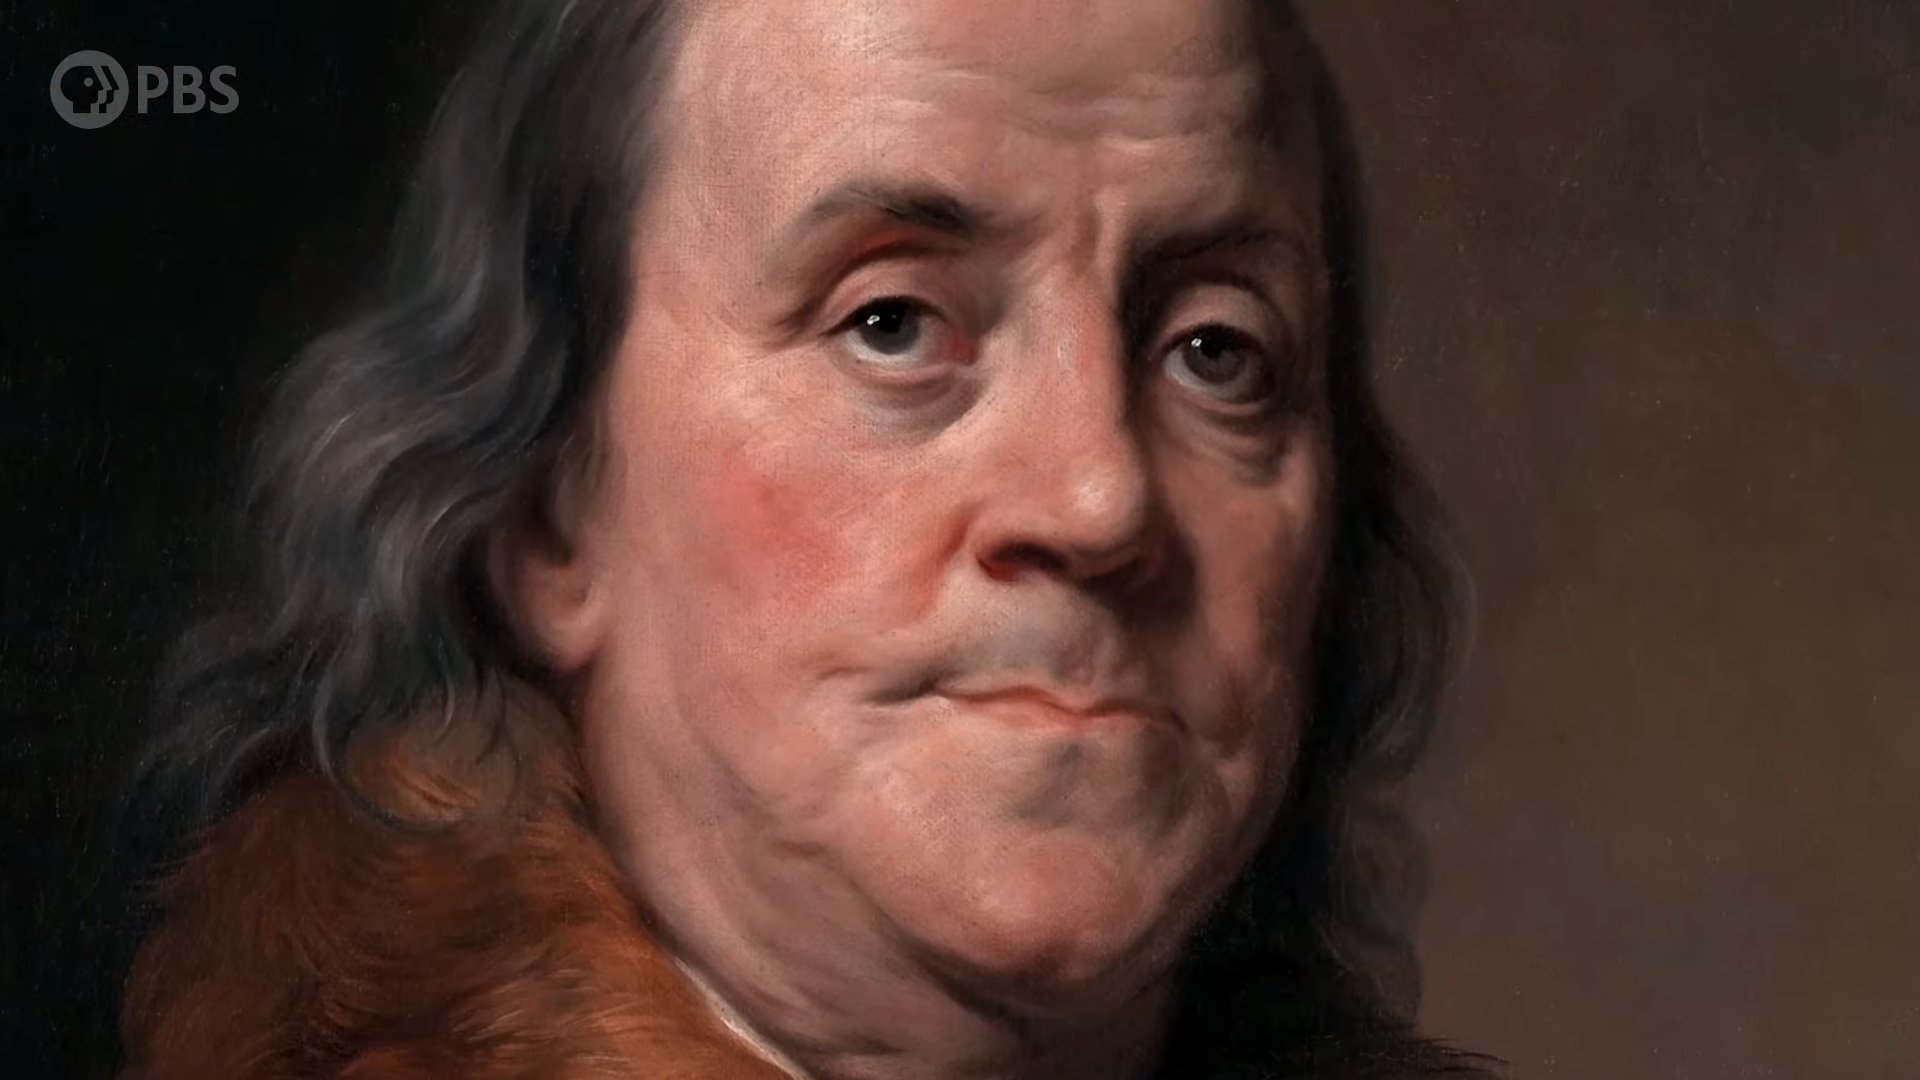 Benjamin Franklin Pbs 